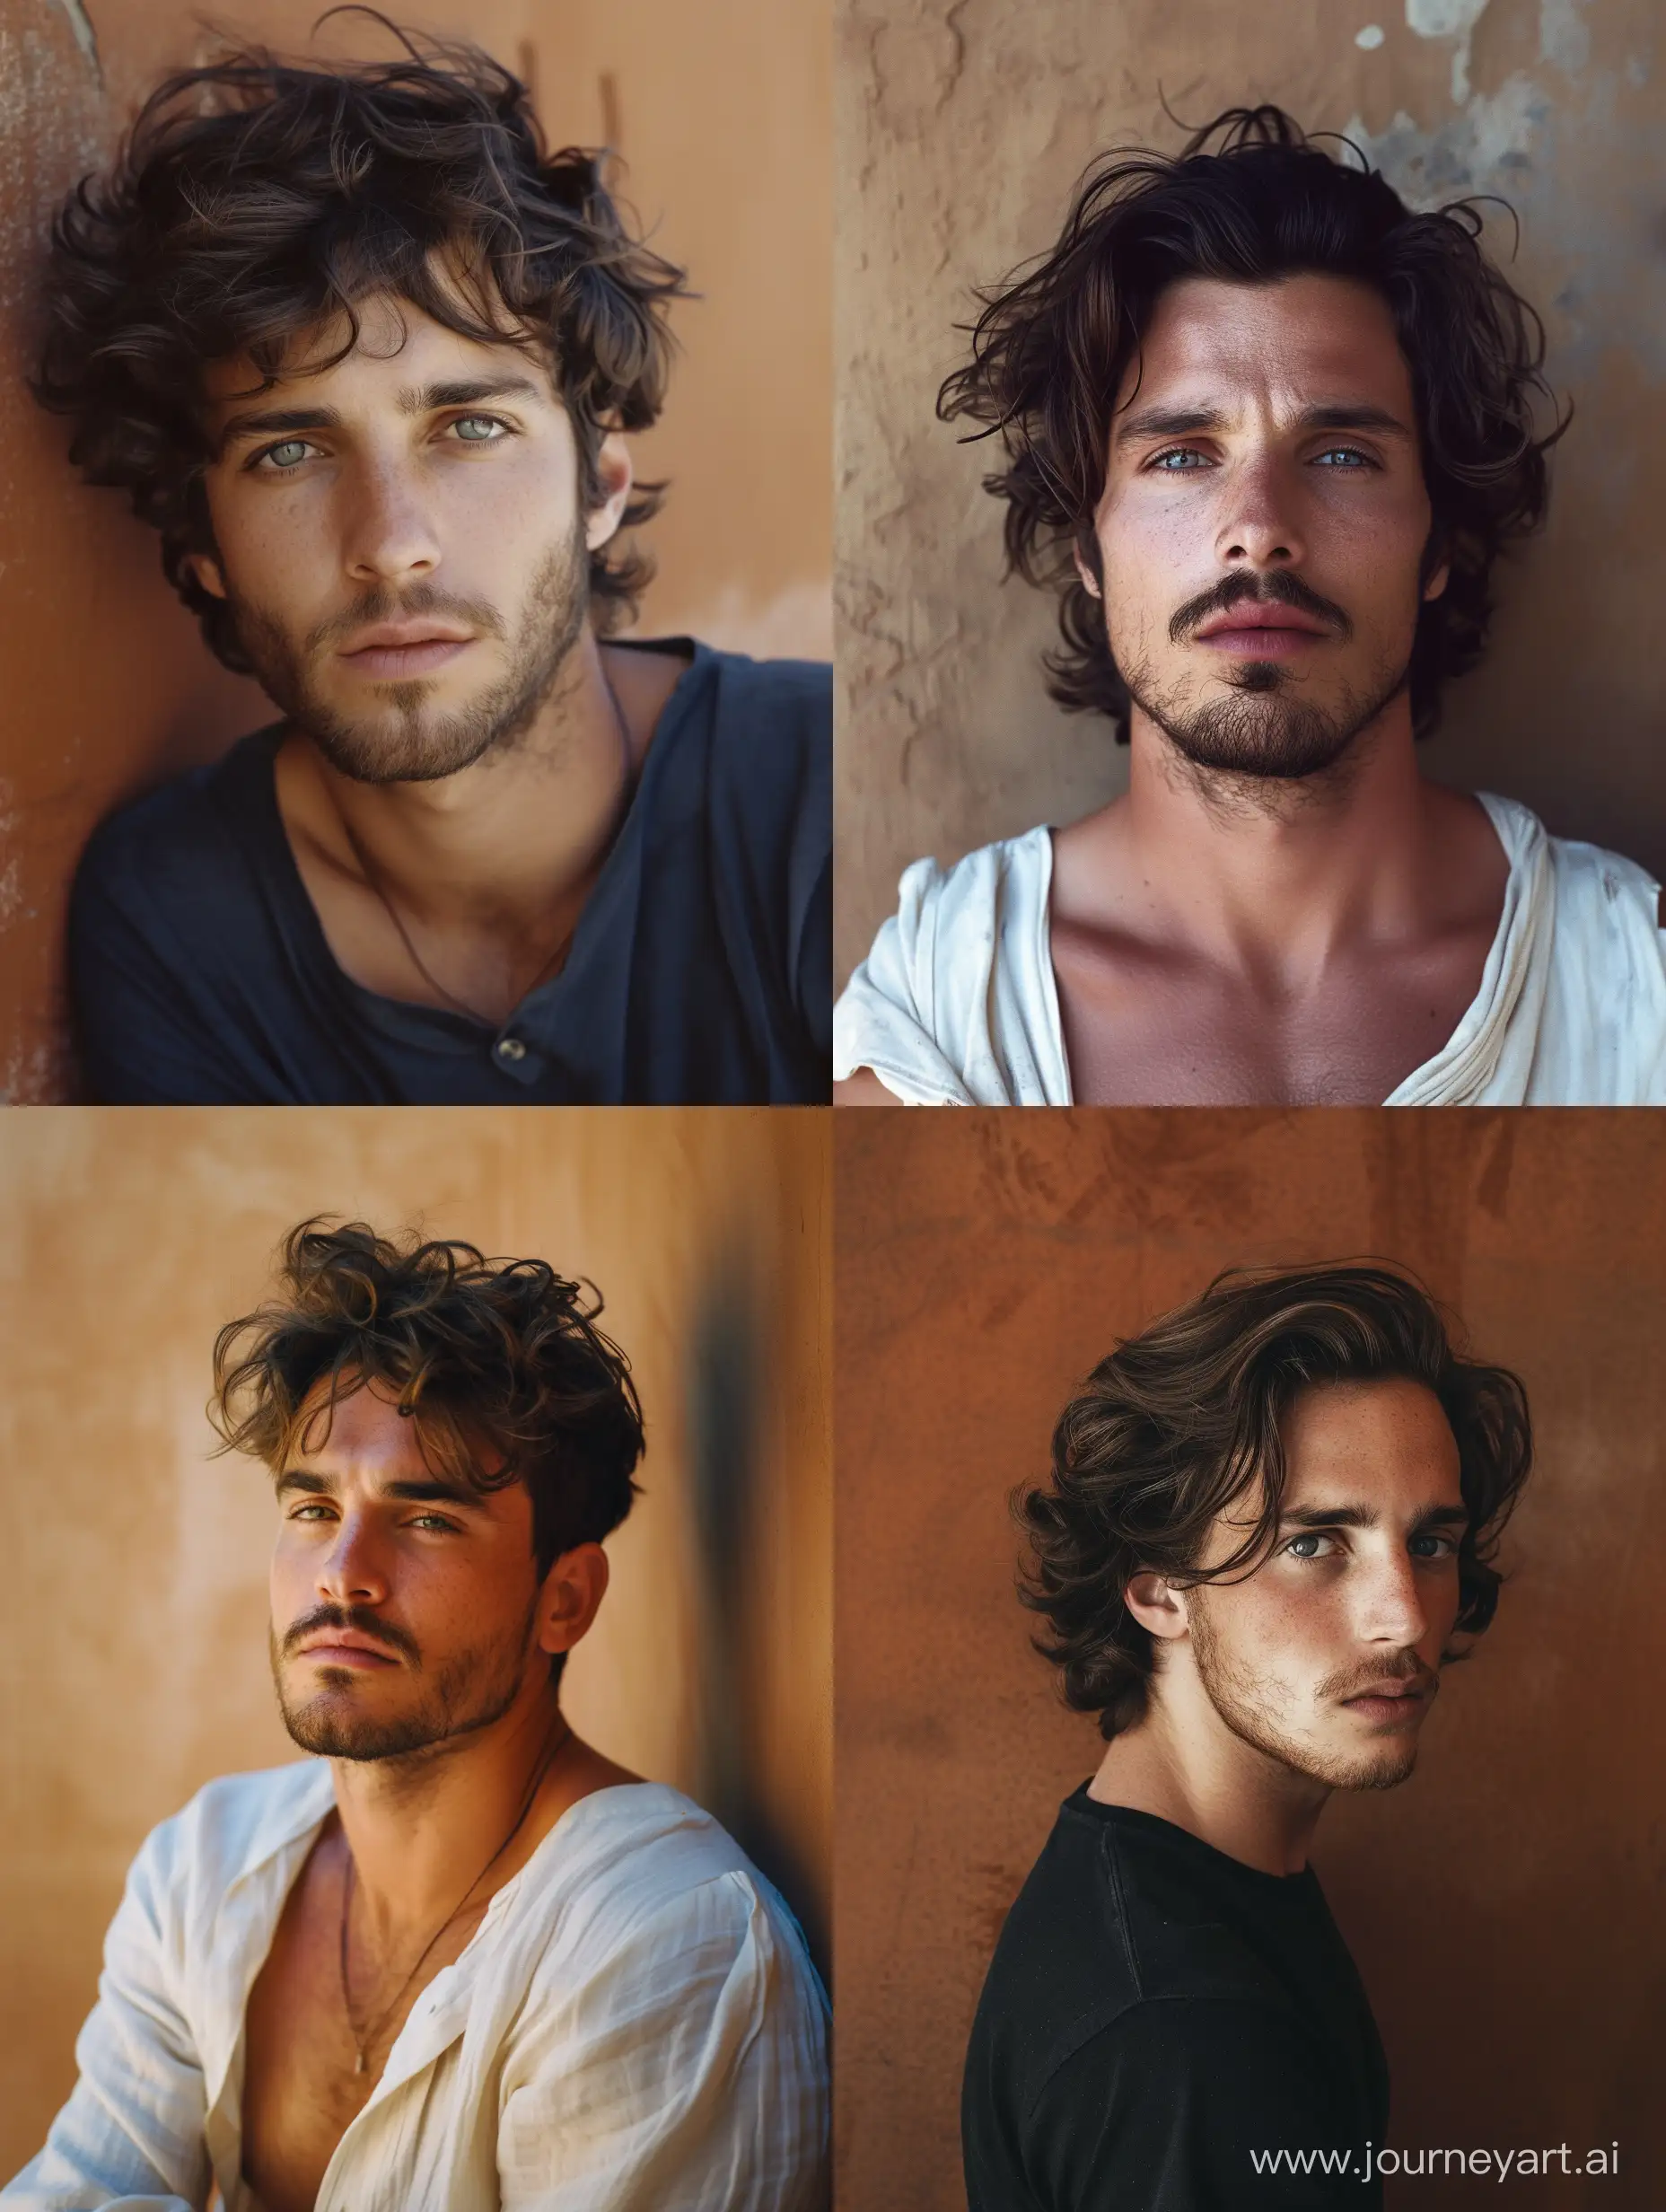 Stylish-Italian-Man-Portrait-against-Brown-Wall-in-Cinematic-Summer-Light